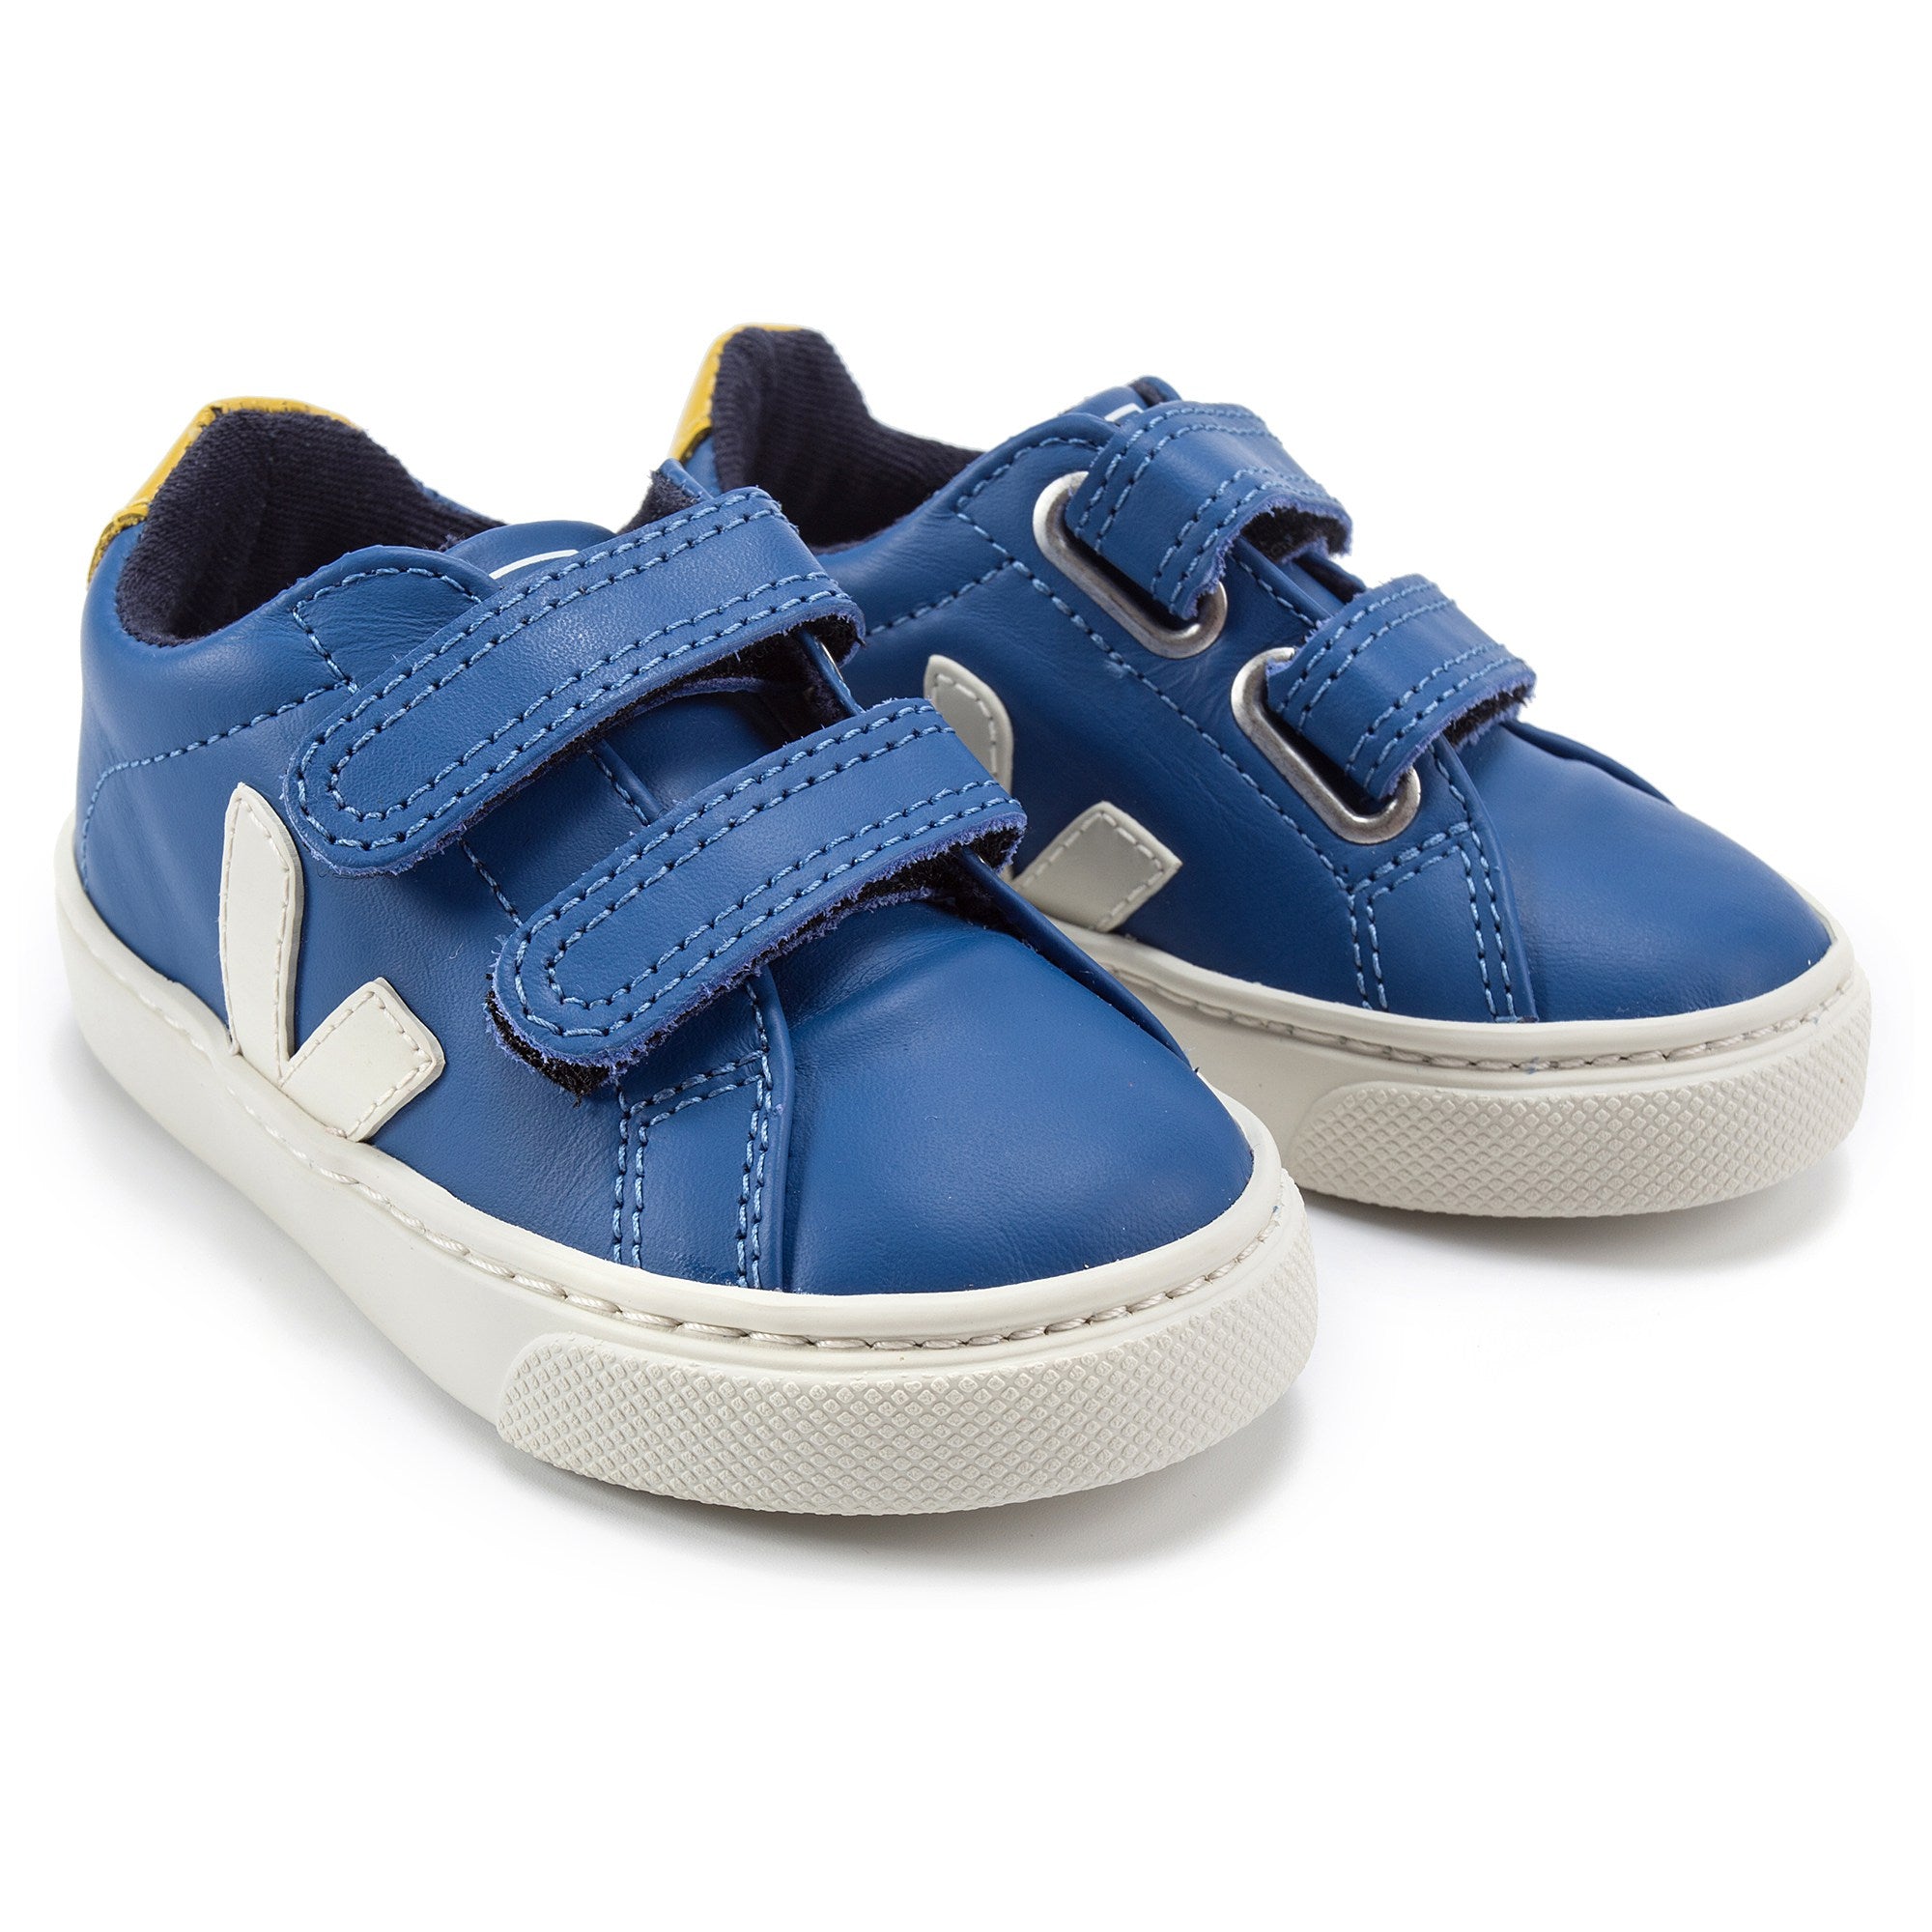 Boys Blue Leather Velcro Whit White "V" Shoes